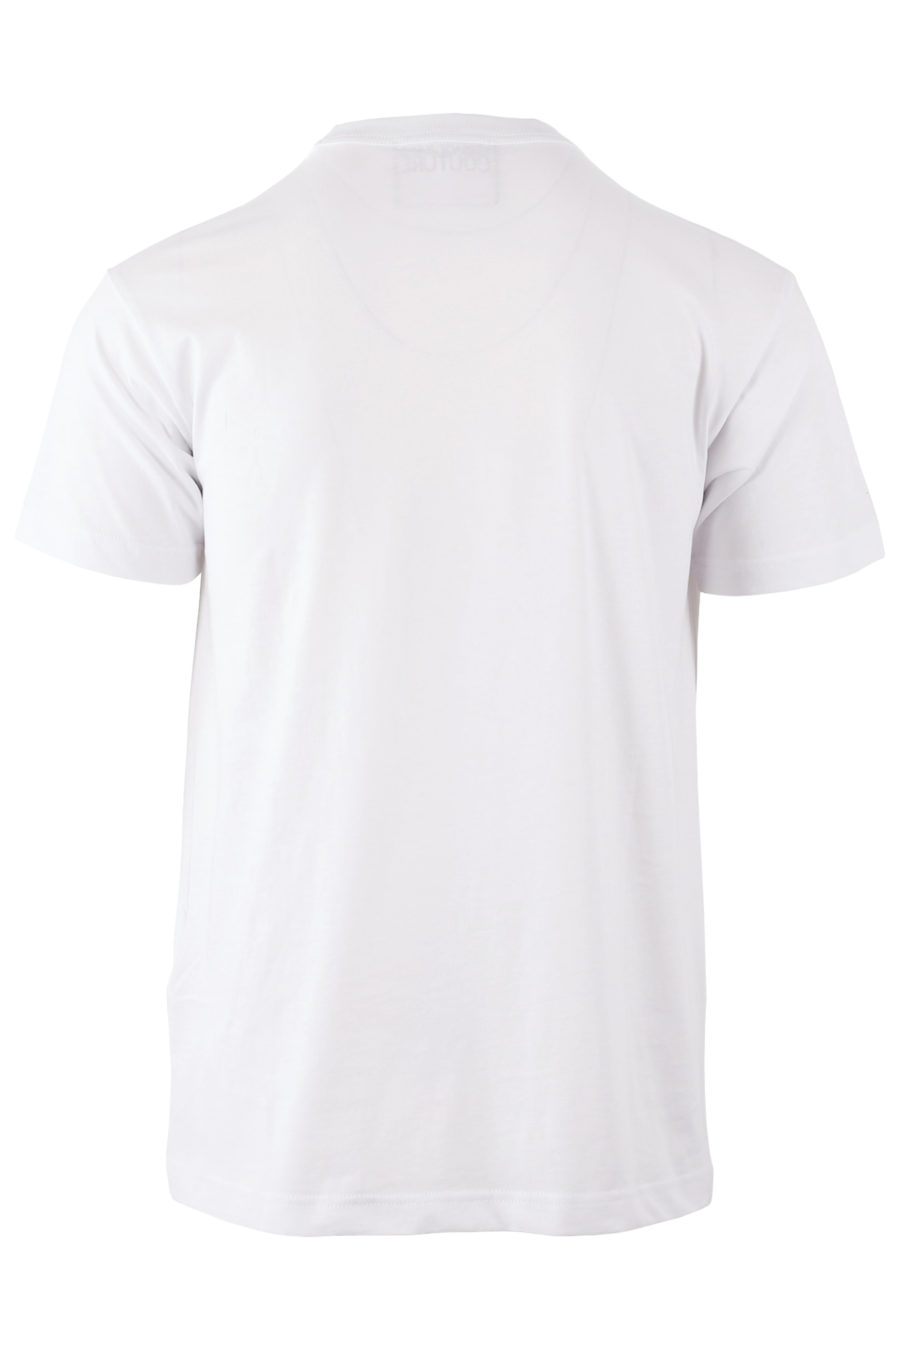 Weißes T-Shirt mit farbigem Logo - 9cb1607c89a7c6ee1bcd9f0763d64c2a7c4e0830